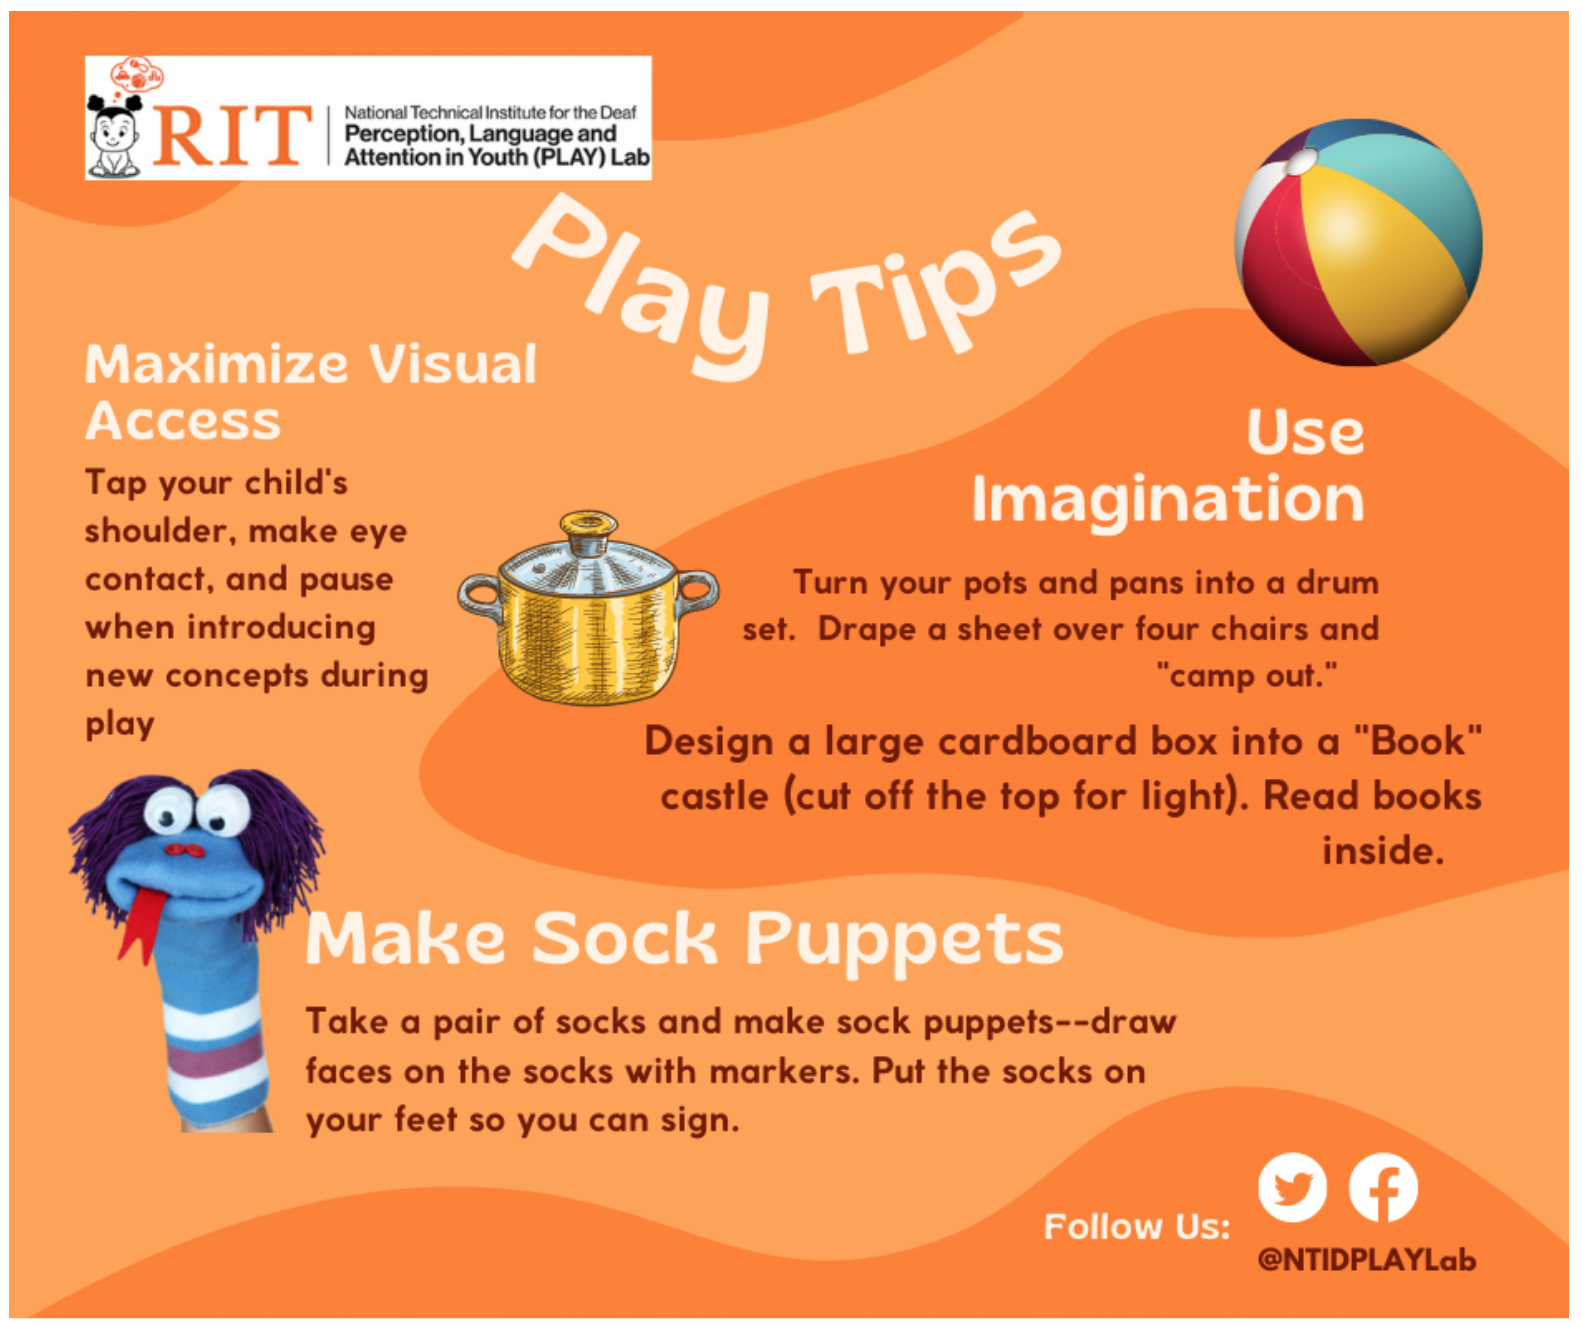 Graphic: maximize visual access, use imagination, make sock puppets